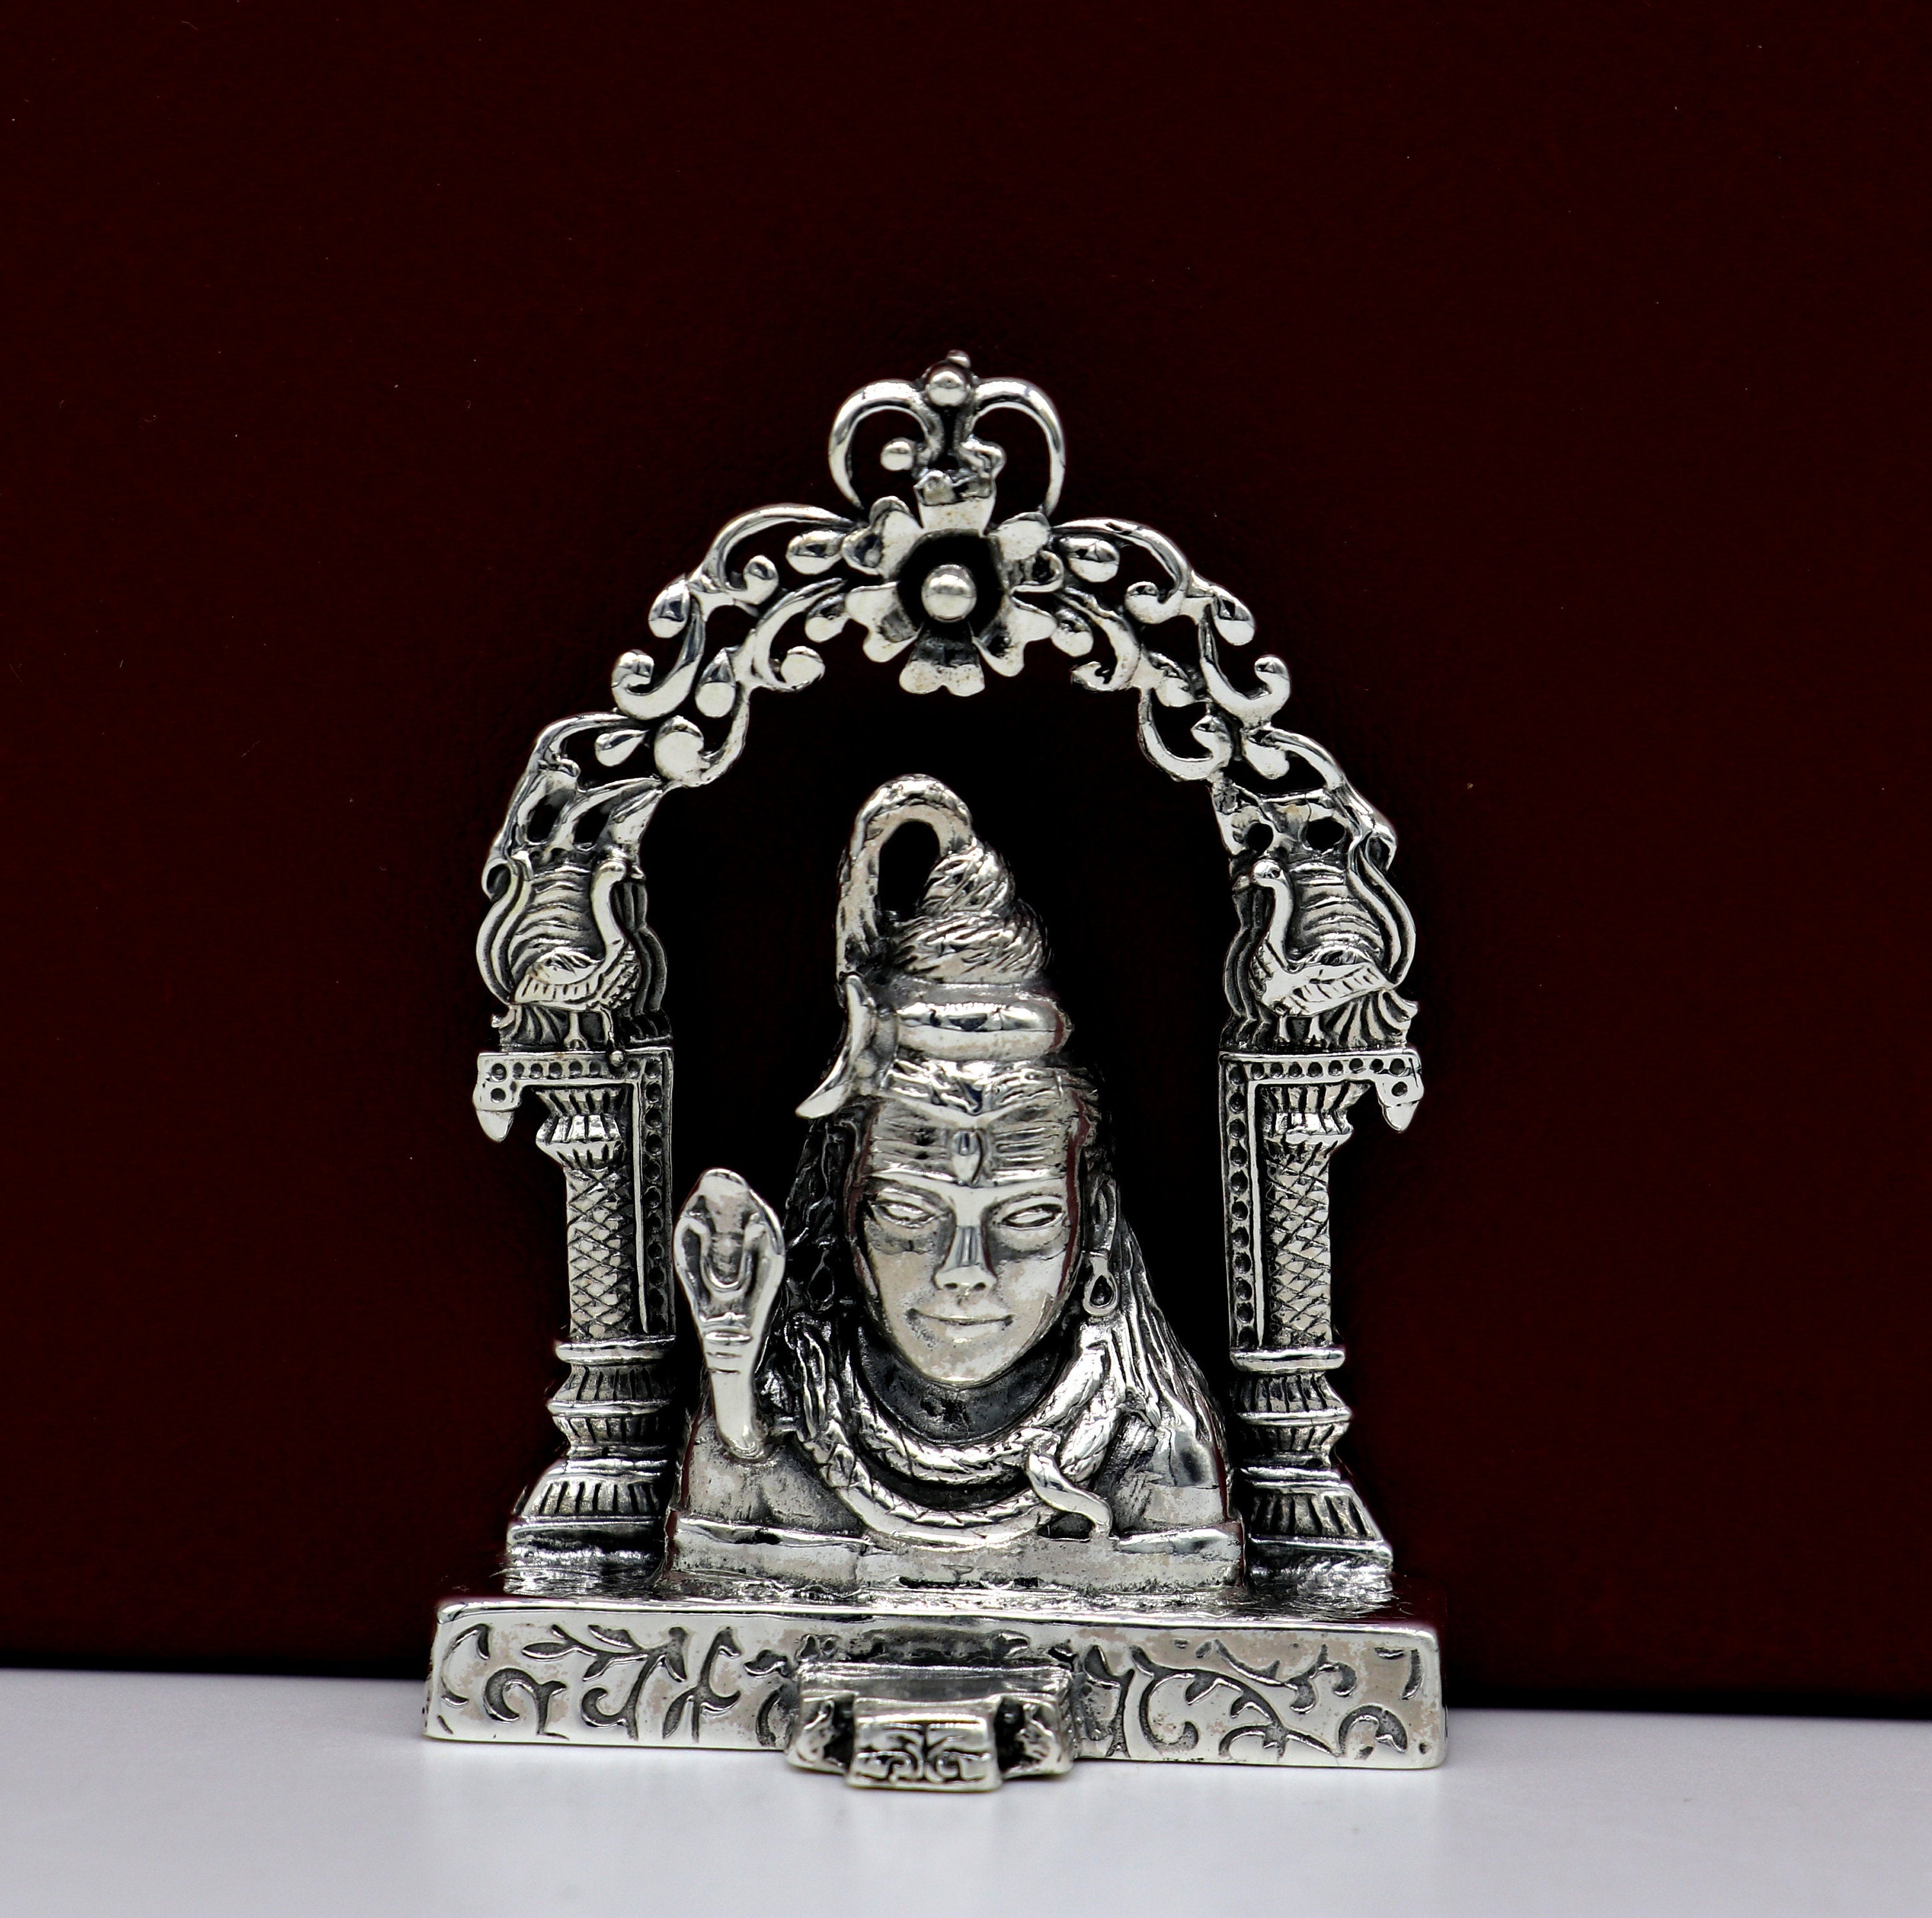 Buy Jaipur Gemstone-20 gm Pure Silver Lakshmi Ganesha Idol for Pooja Silver  Laxmi Ganesh Murti for Gift Online - Get 57% Off